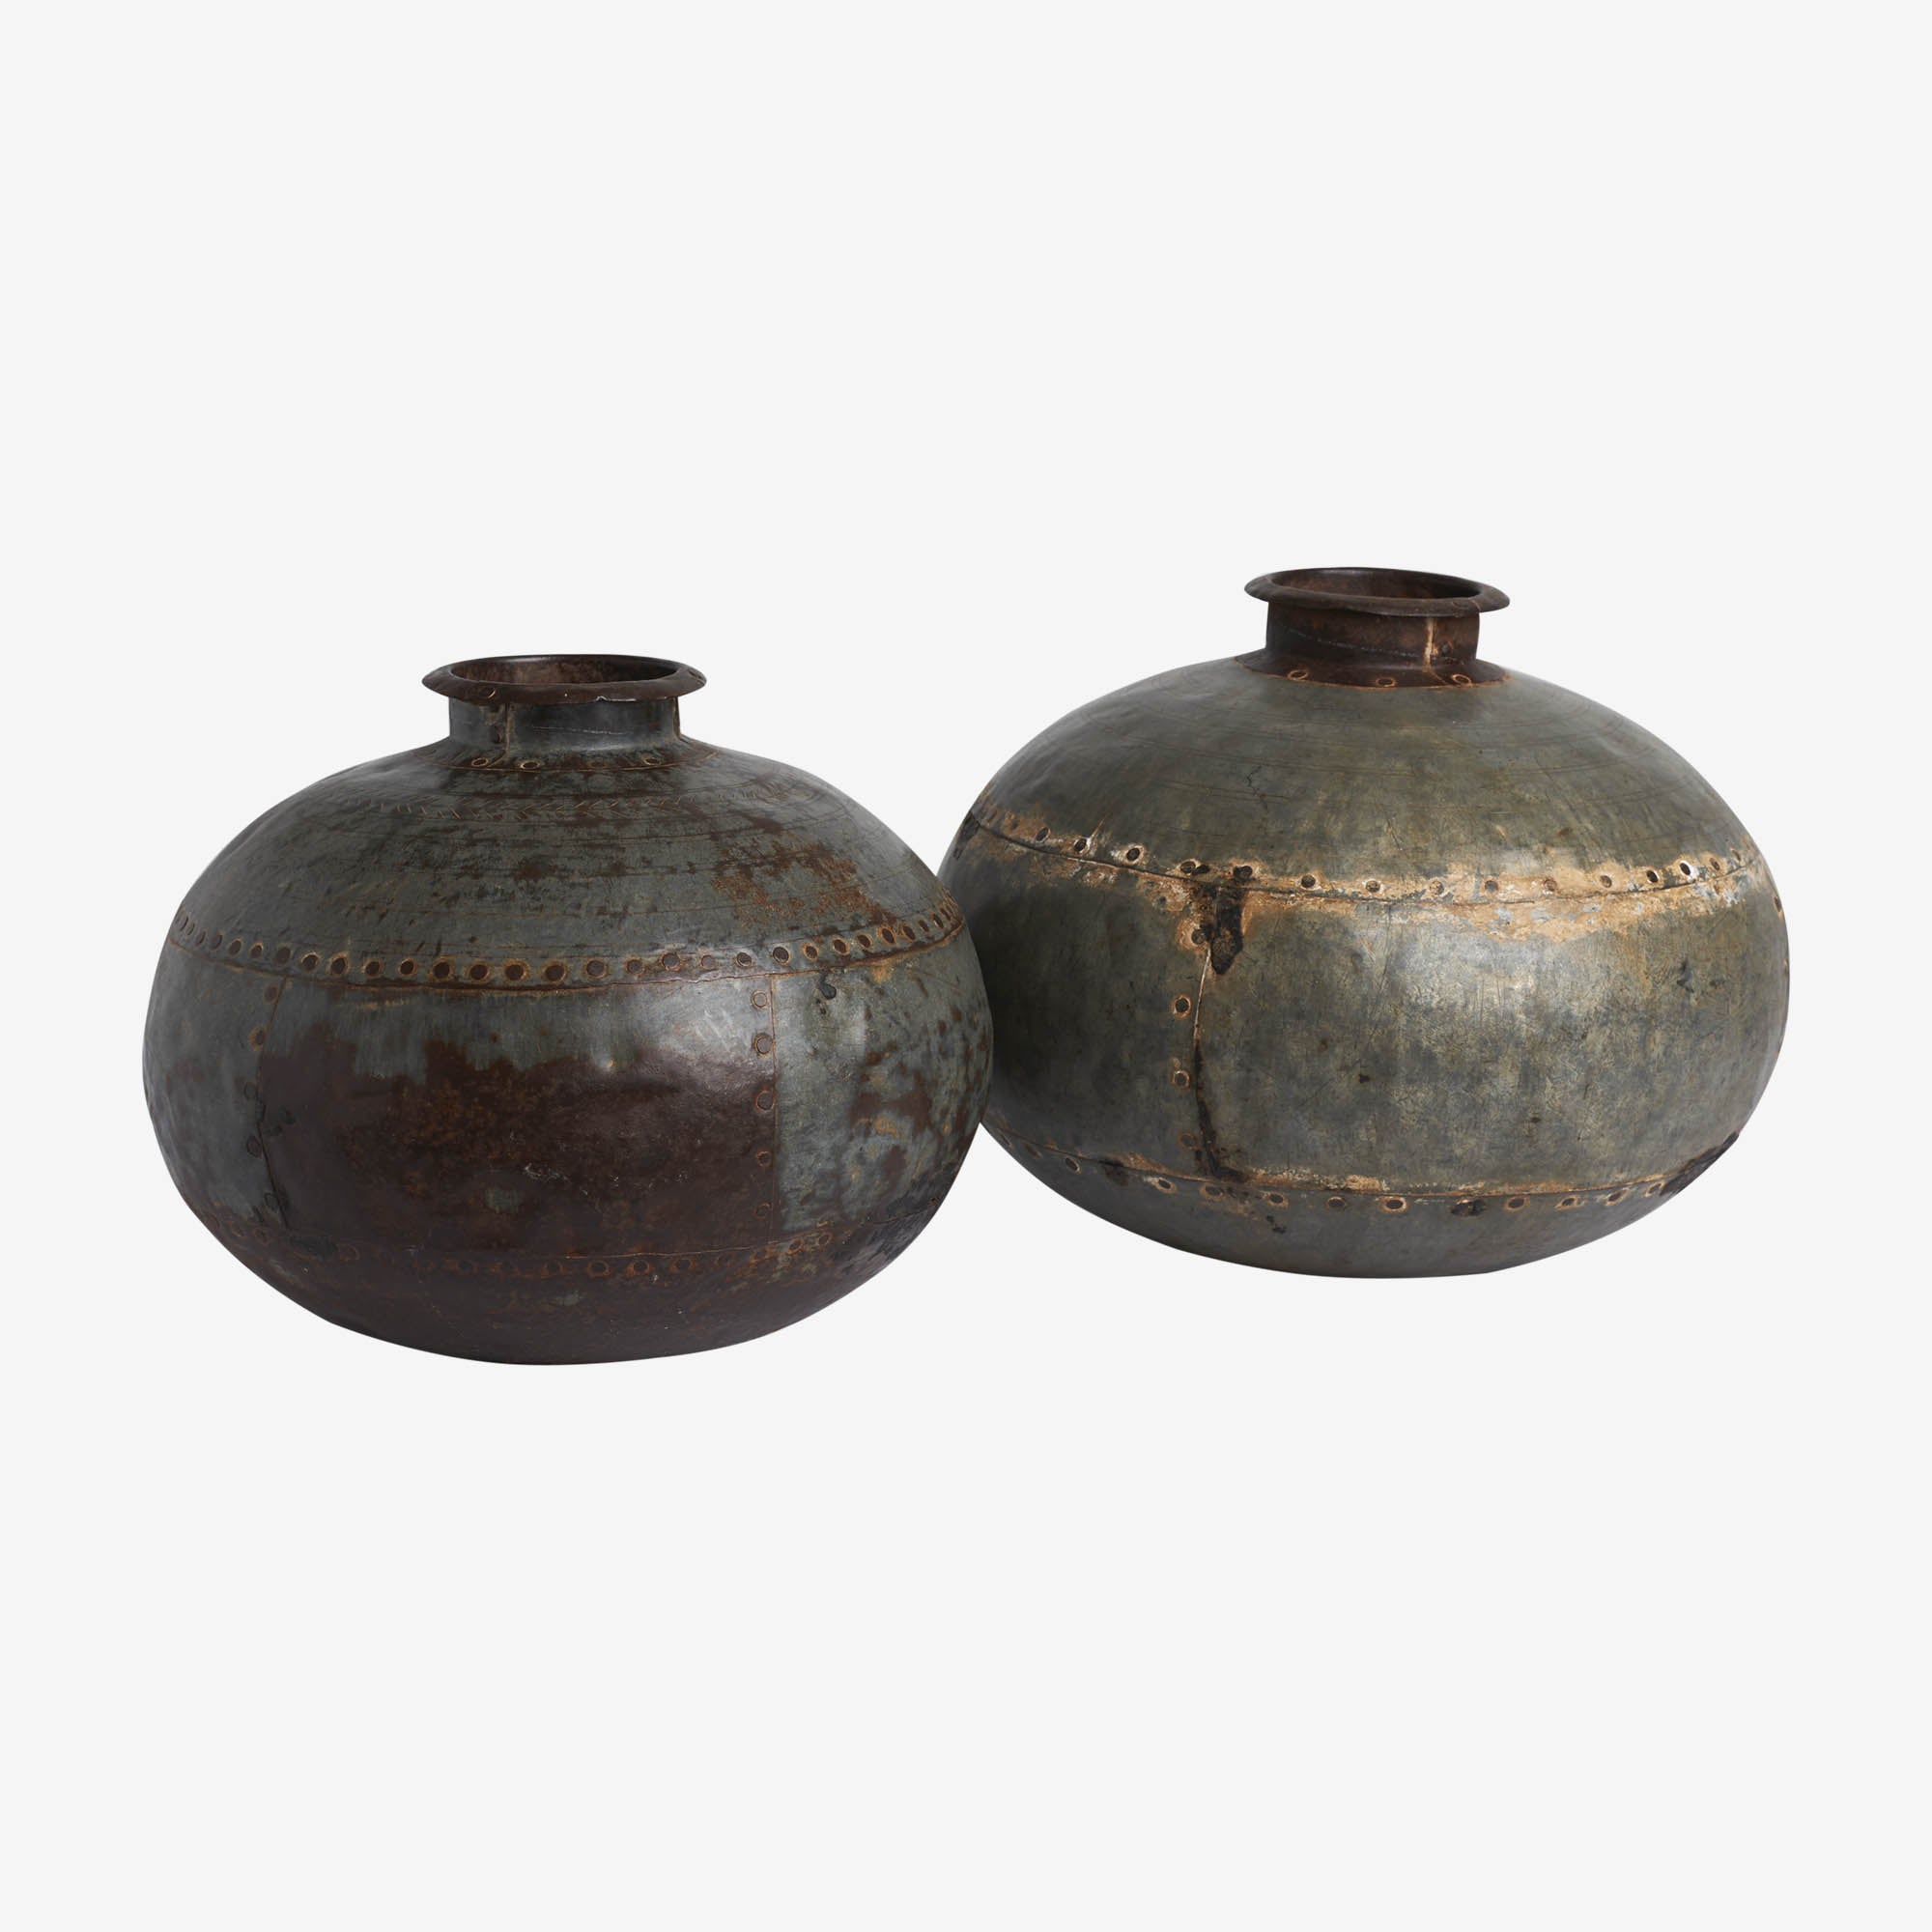 Old iron water pot